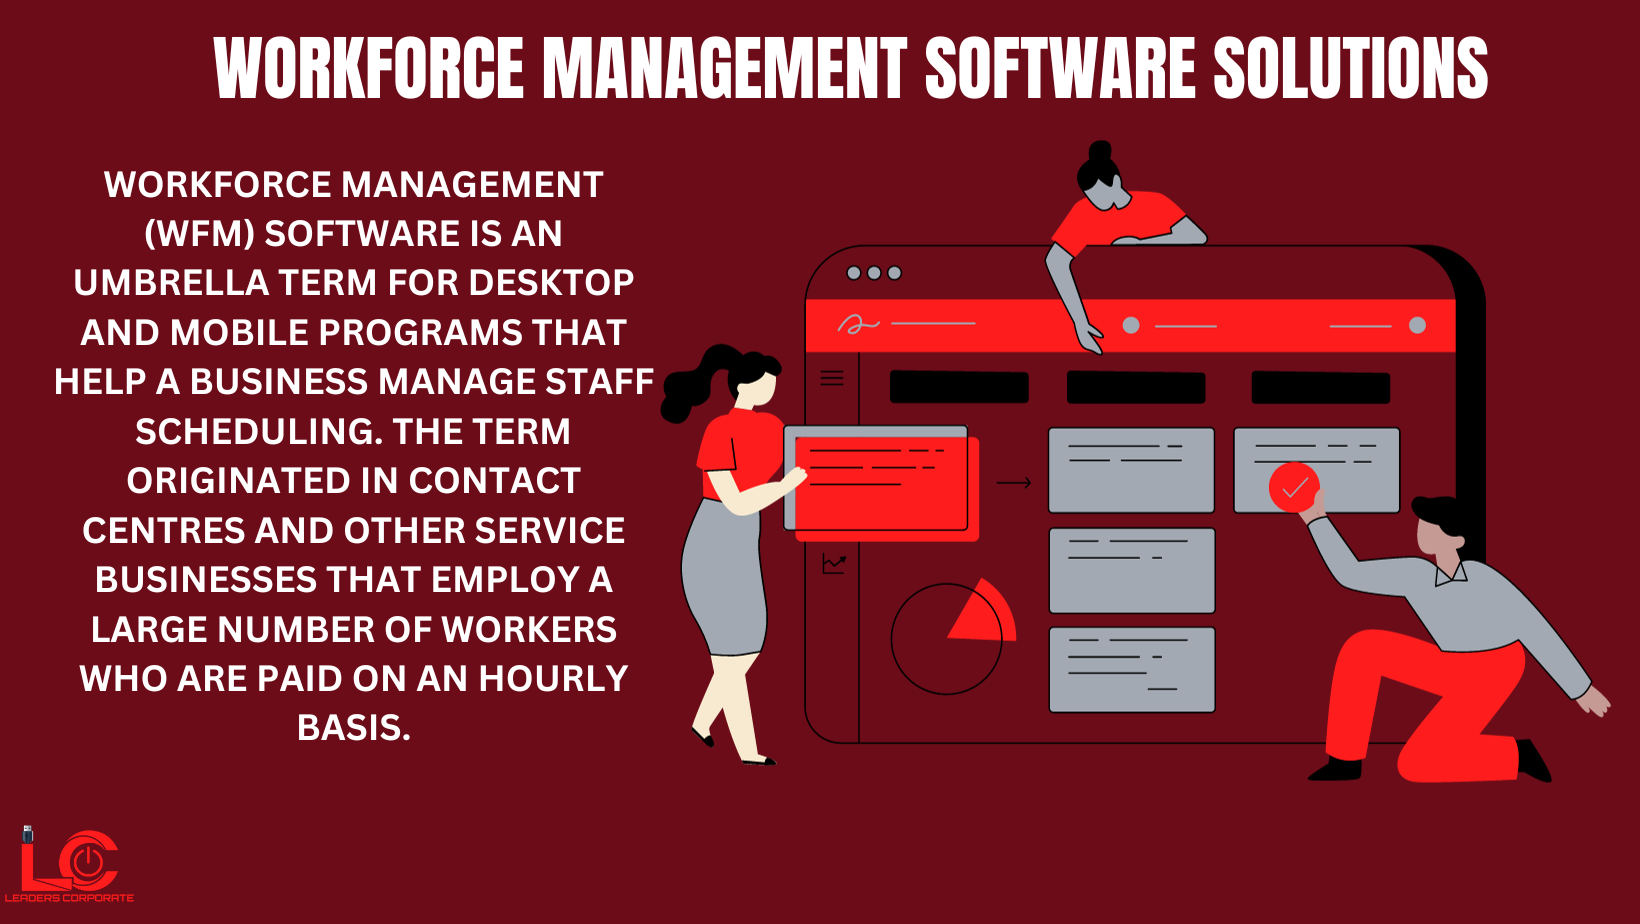 workforce management system